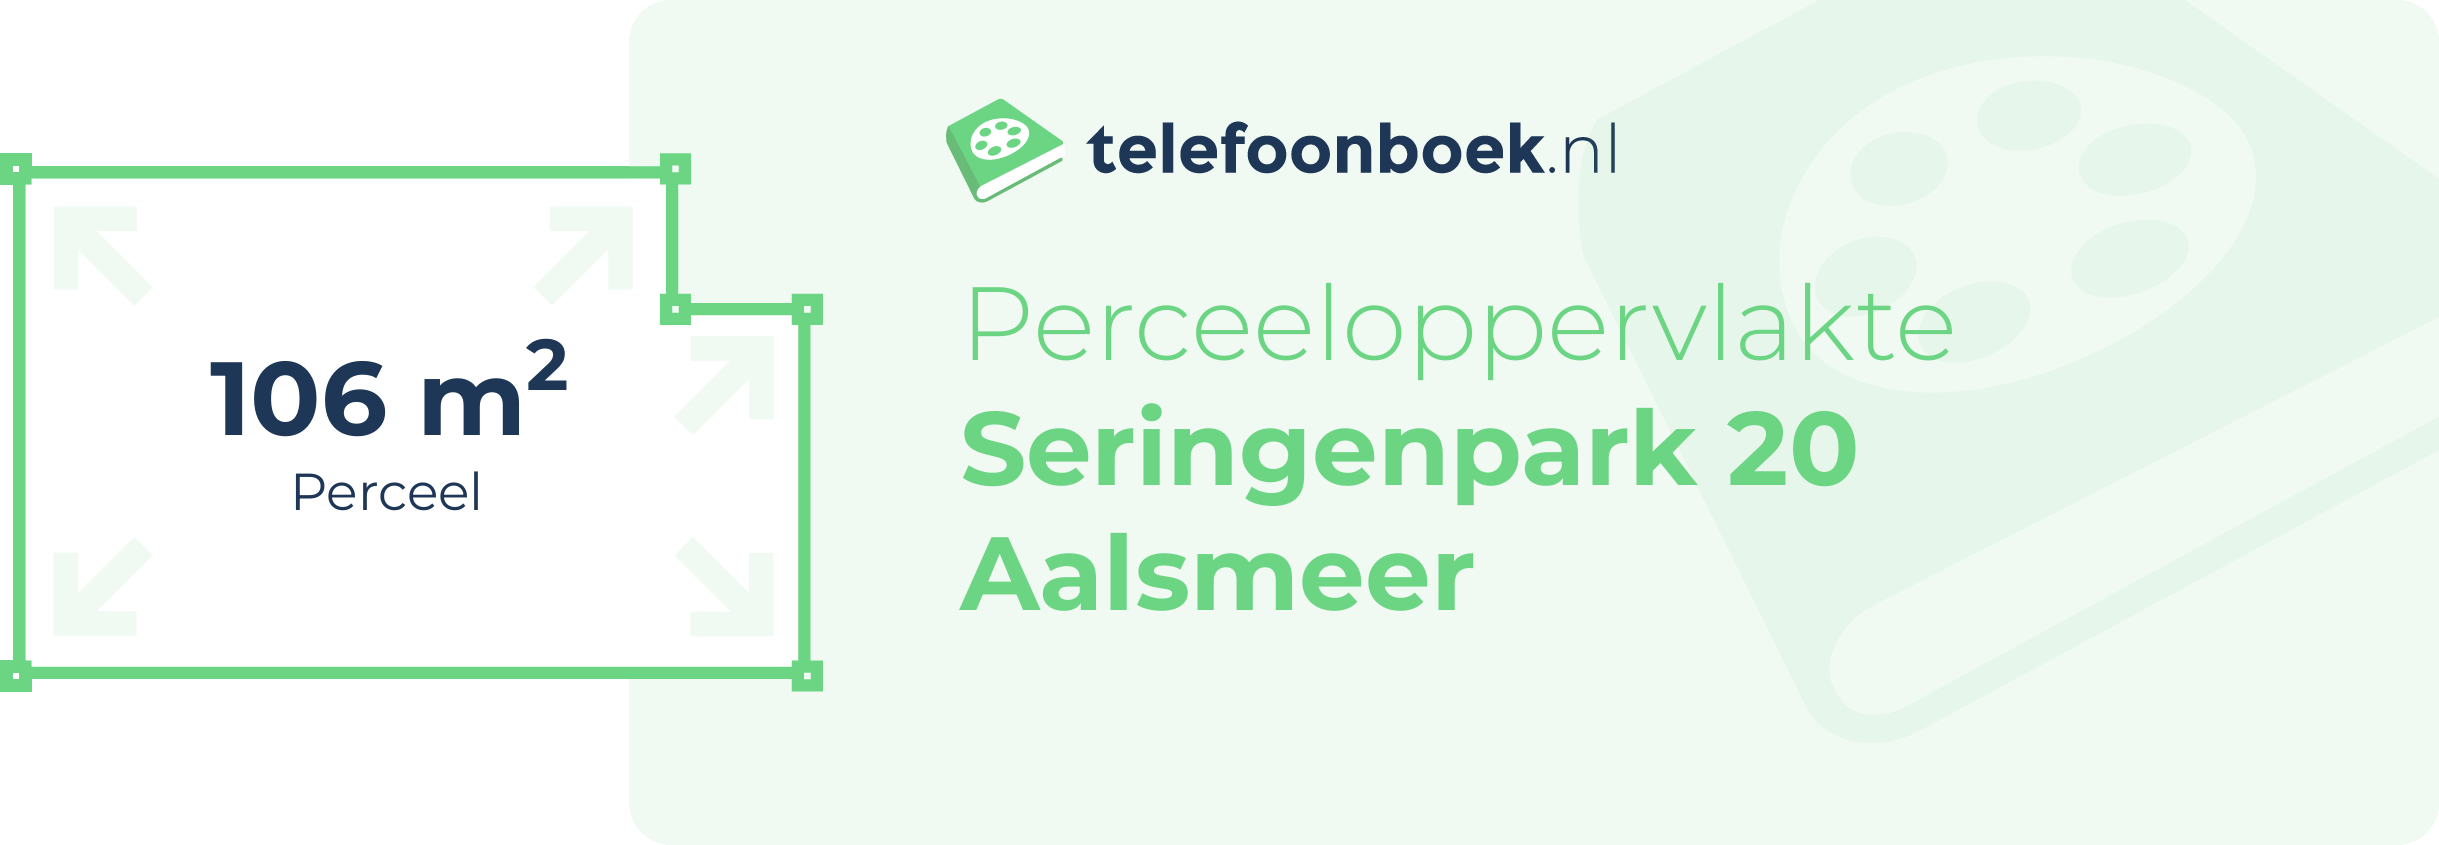 Perceeloppervlakte Seringenpark 20 Aalsmeer